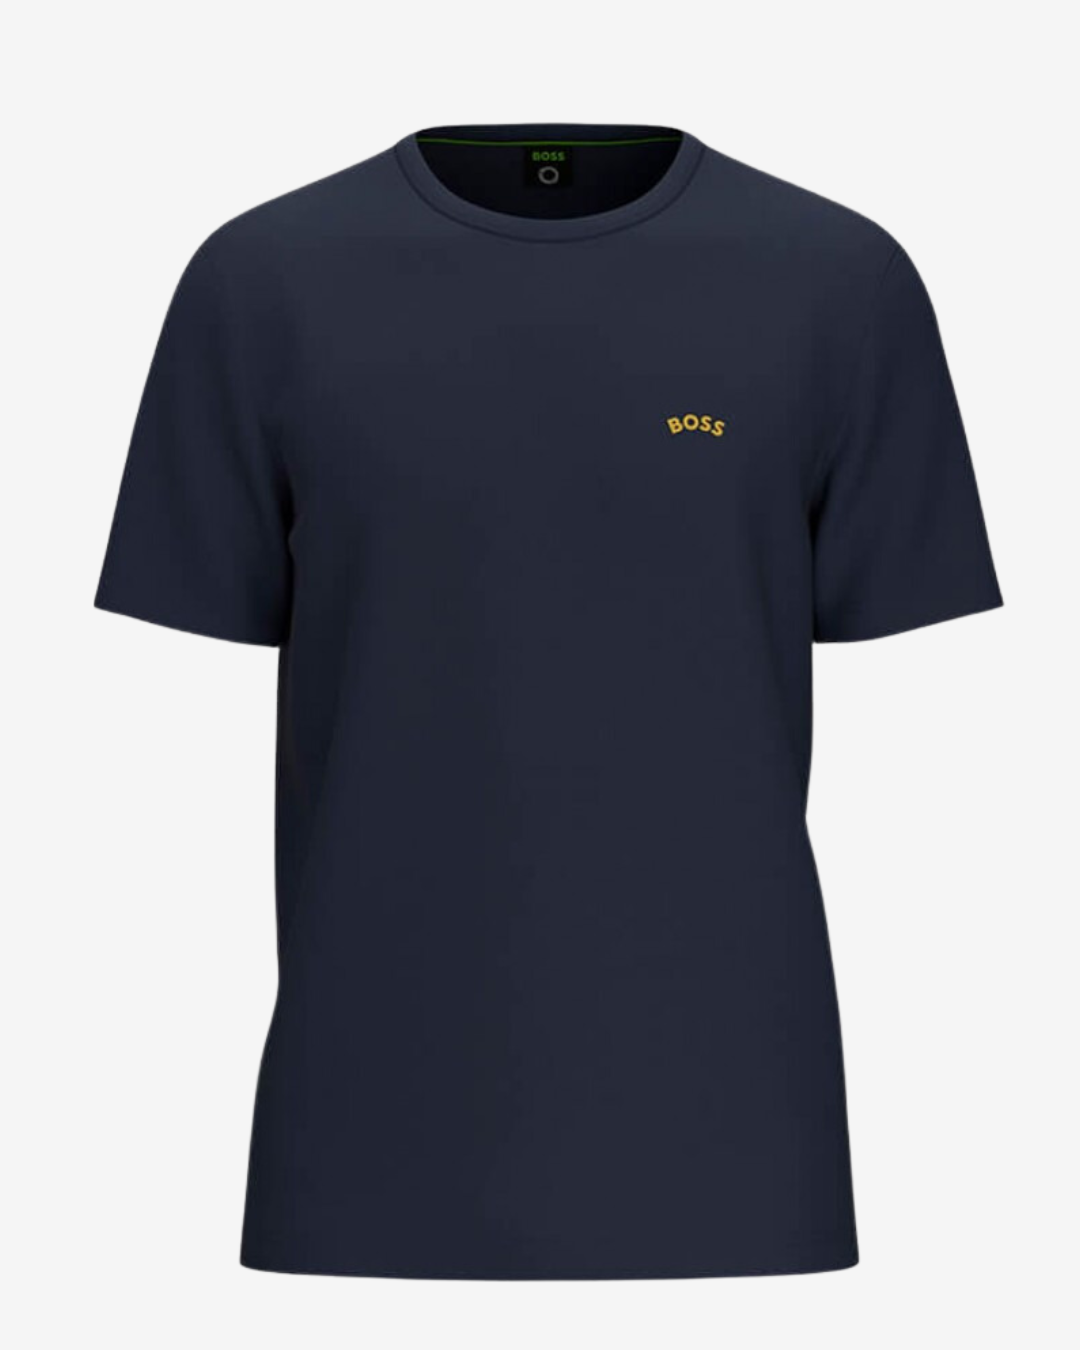 Se Hugo Boss Curved logo t-shirt - Navy / Guld - Str. 3XL - Modish.dk hos Modish.dk